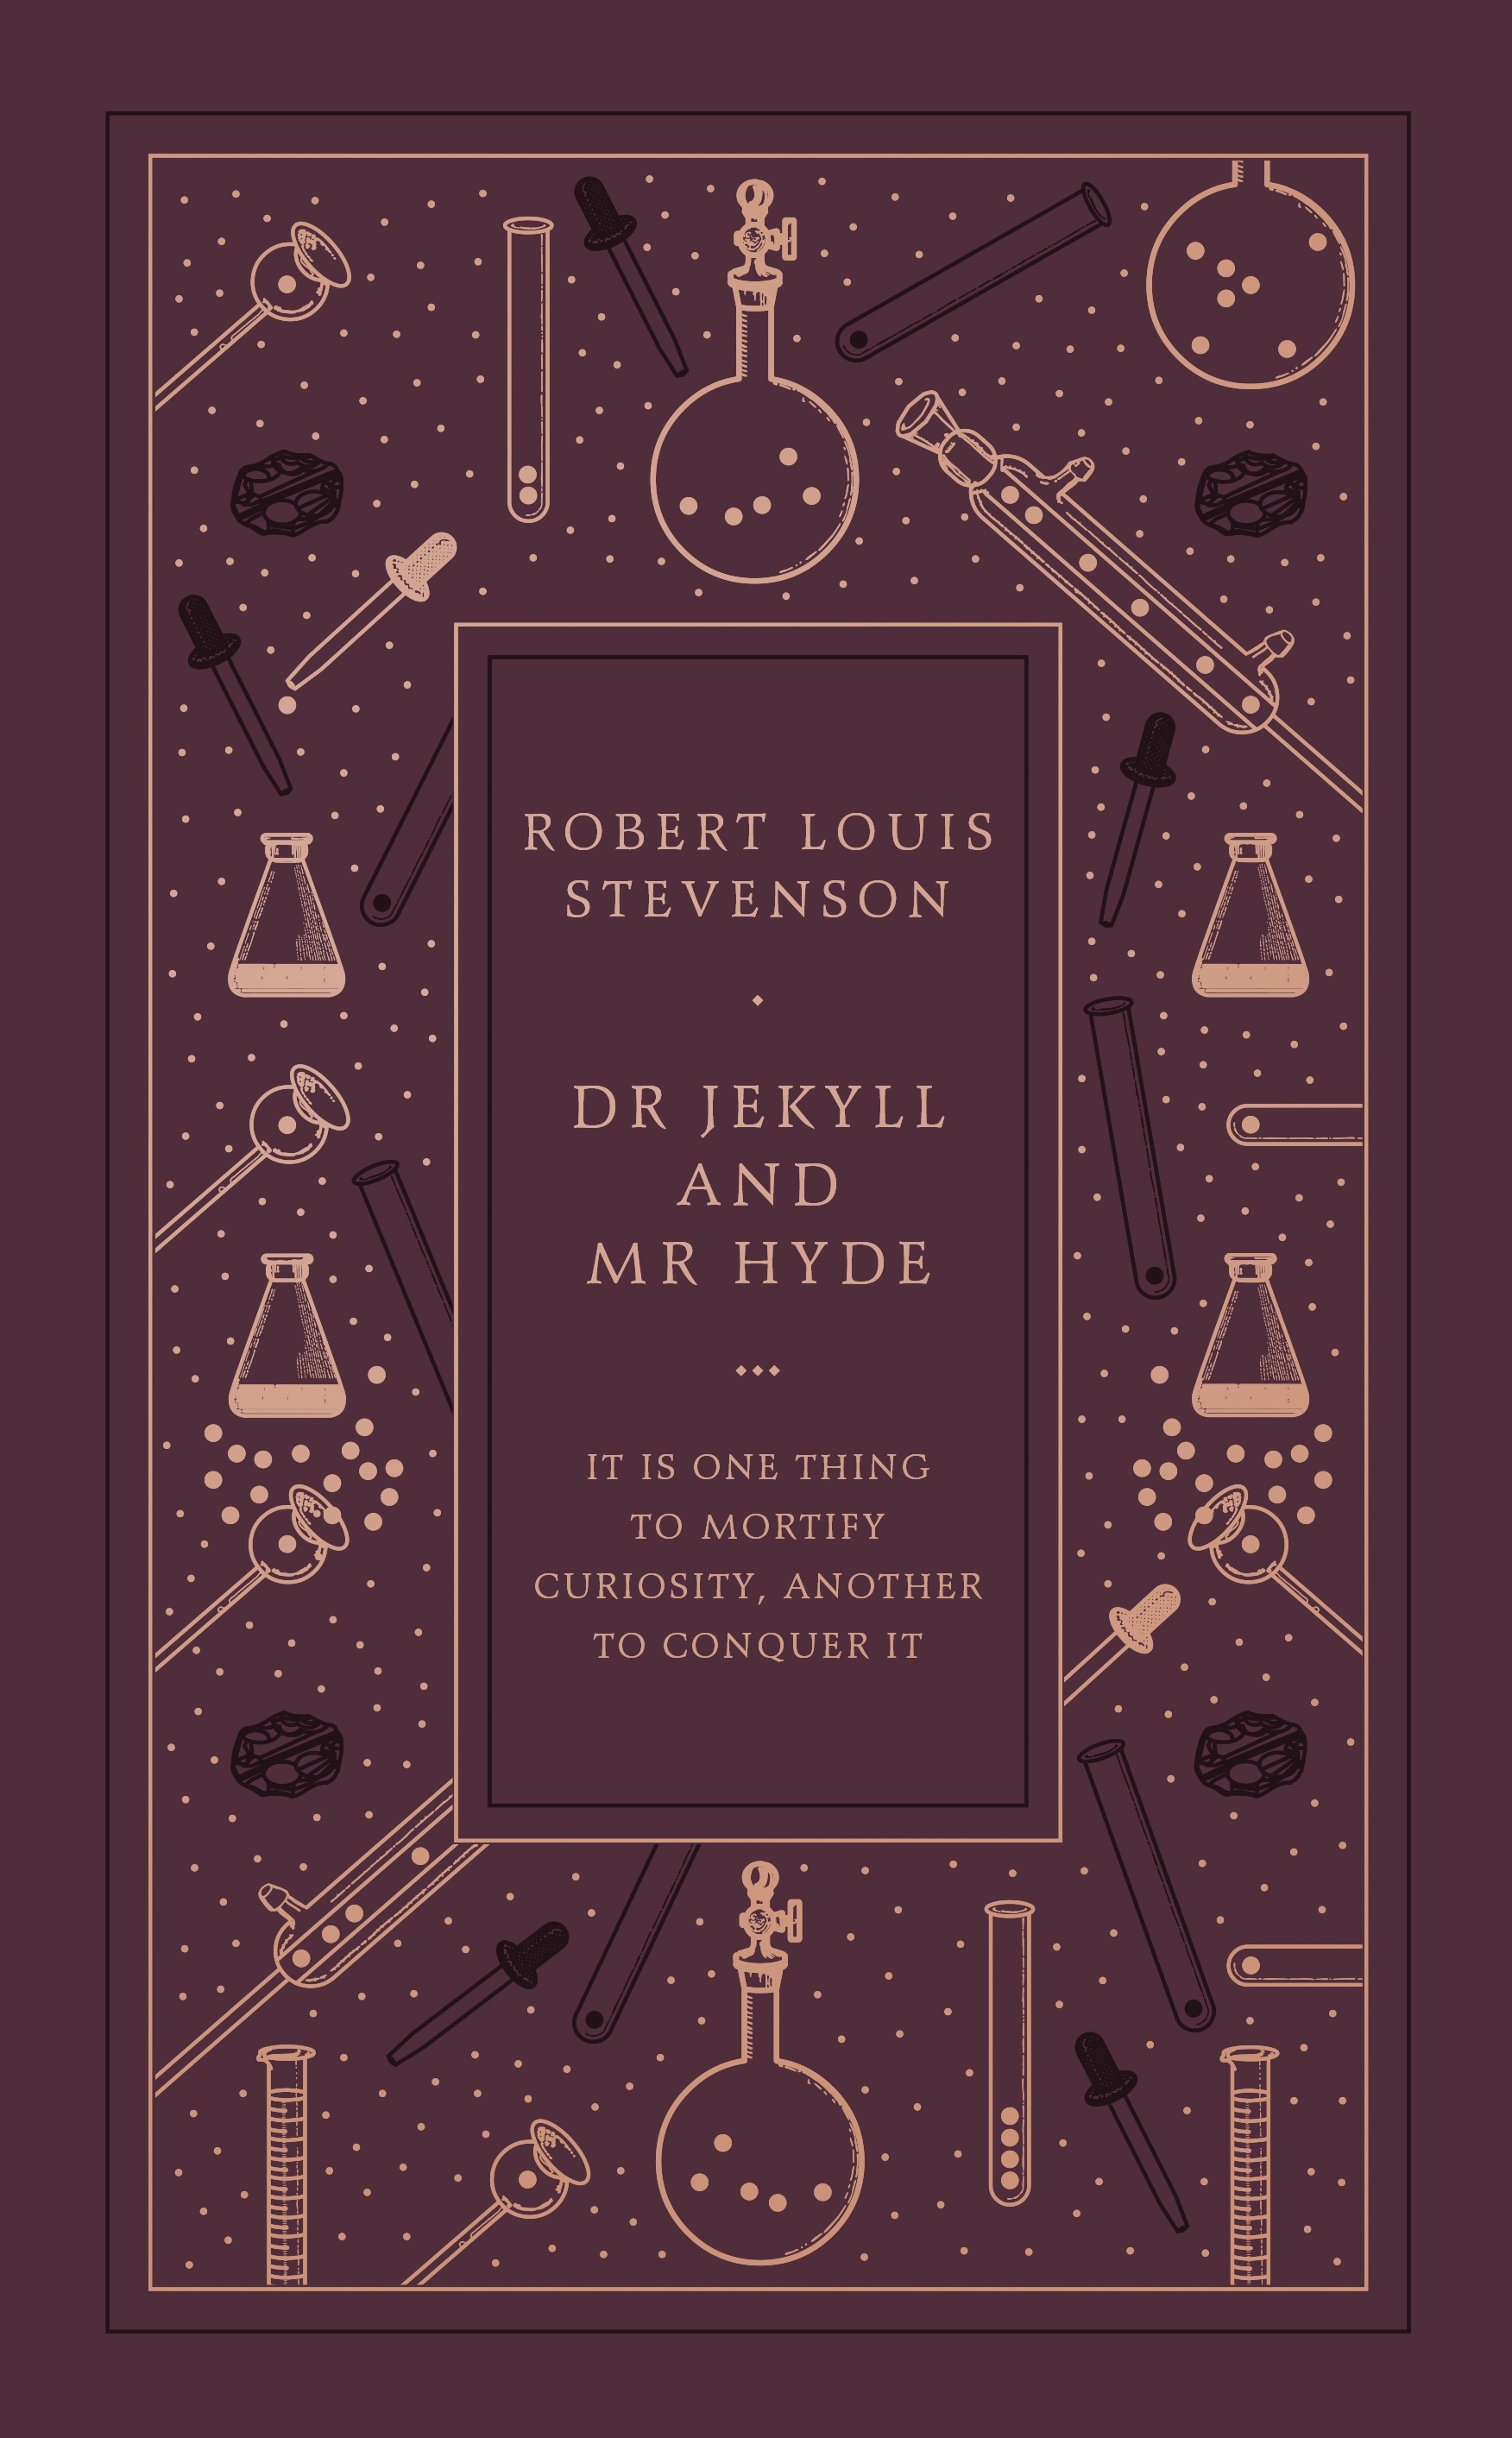 Book “Dr Jekyll and Mr Hyde” by Robert Louis Stevenson — December 3, 2015